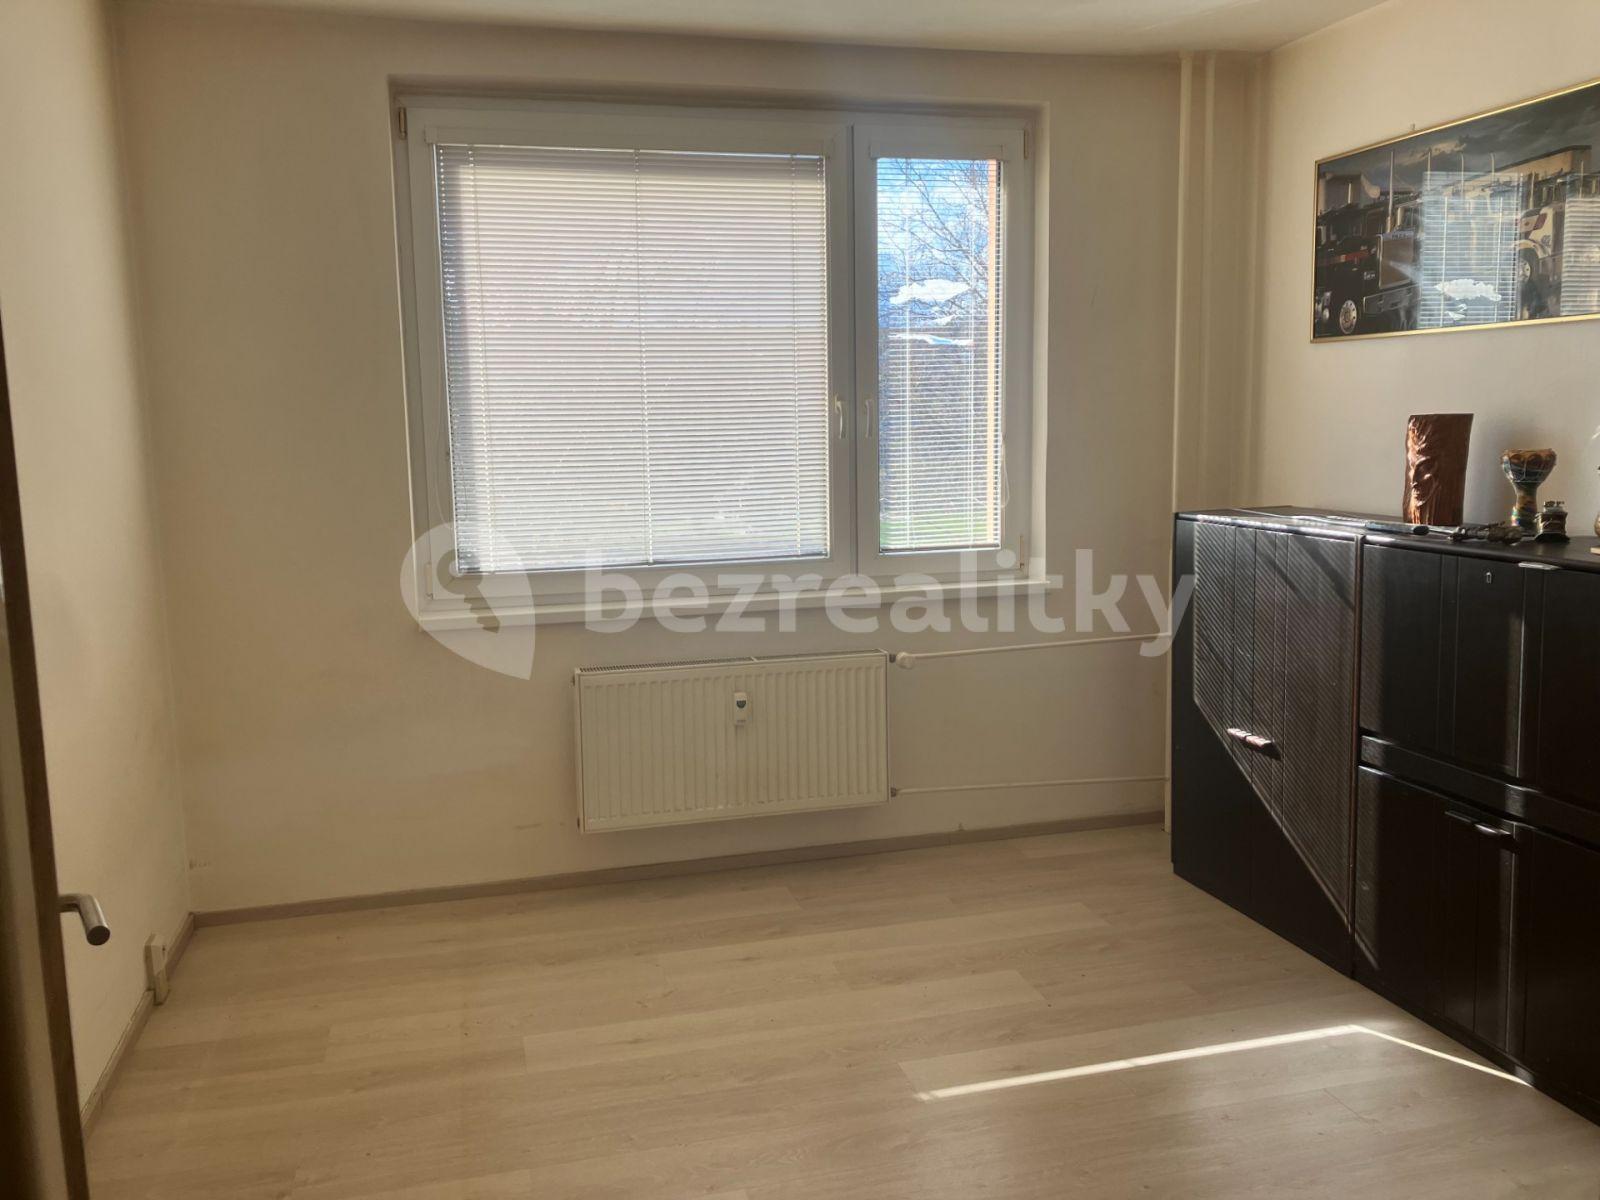 3 bedroom flat for sale, 74 m², Židlochovice, Jihomoravský Region